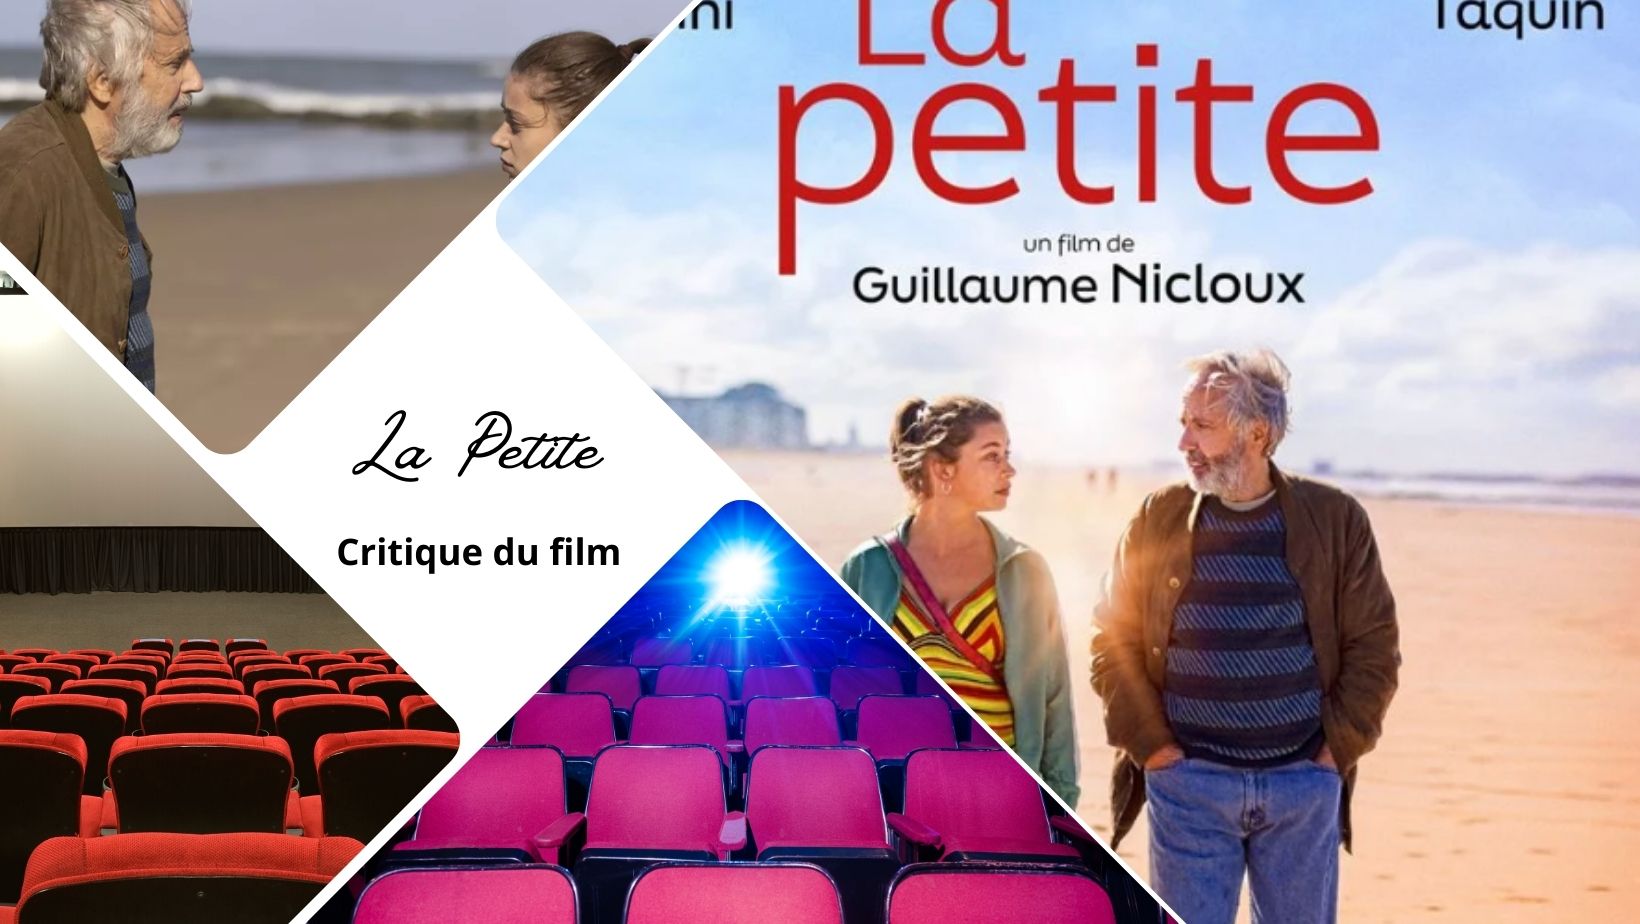 La Petite avec Fabrice Luchini - Critique du film